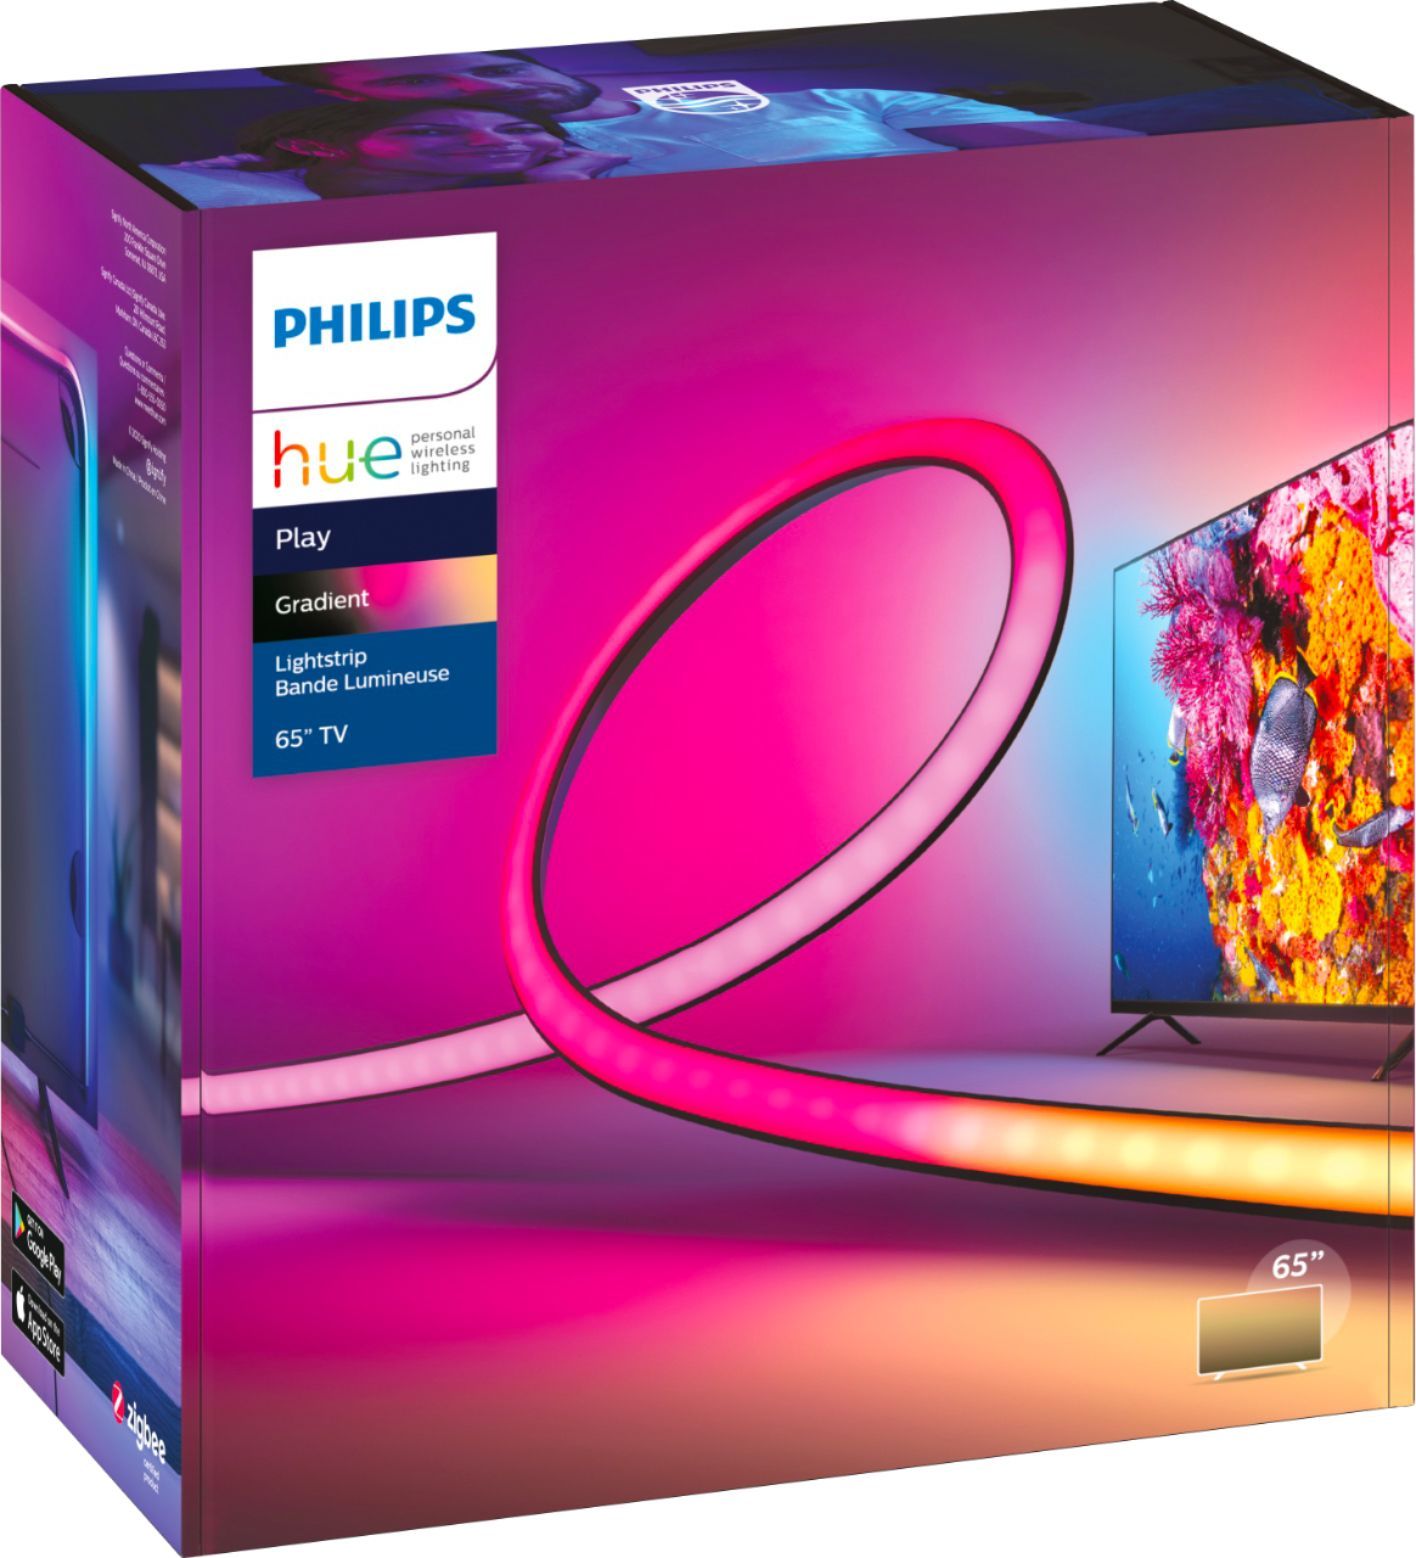 Philips Hue Play Gradient Lightstrip 65" 560417 - Best Buy | Best Buy U.S.